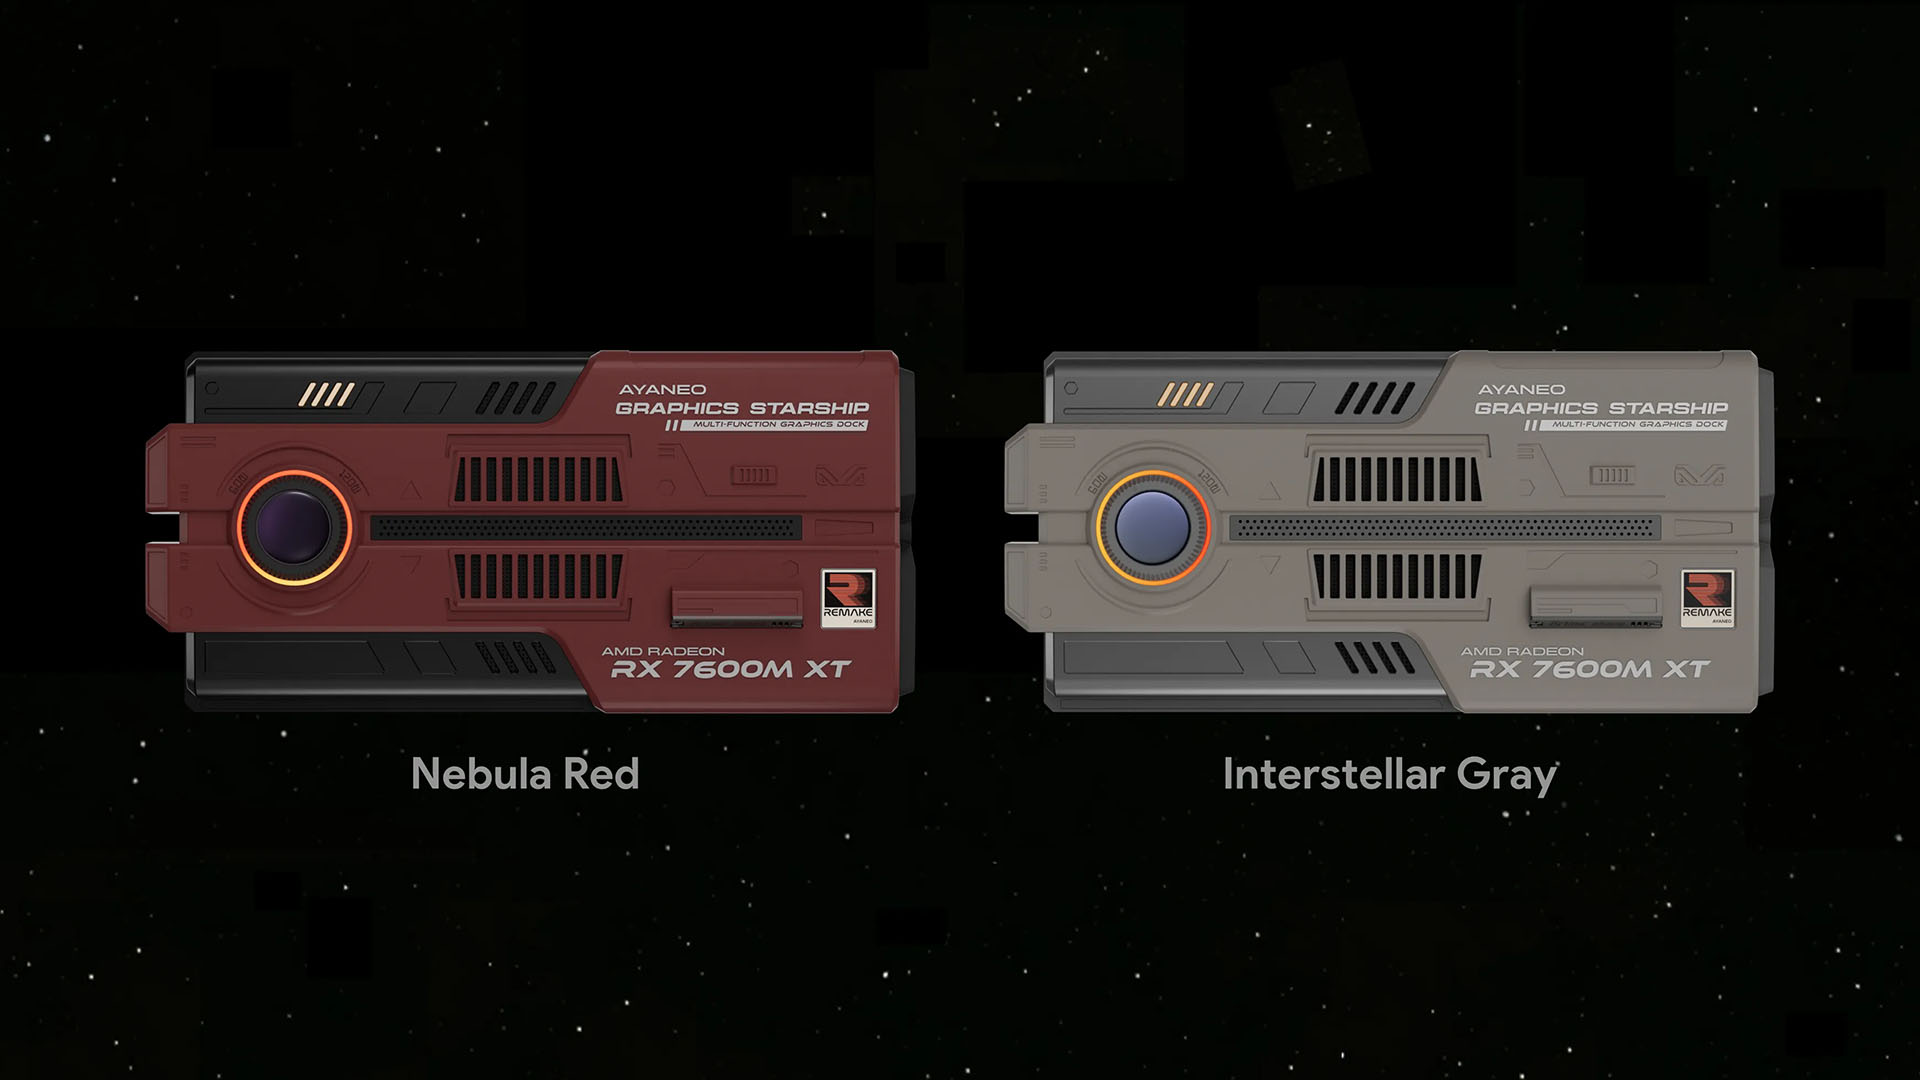 Ayaneo Graphics Starship AG01 external GPU dock red and gray color options